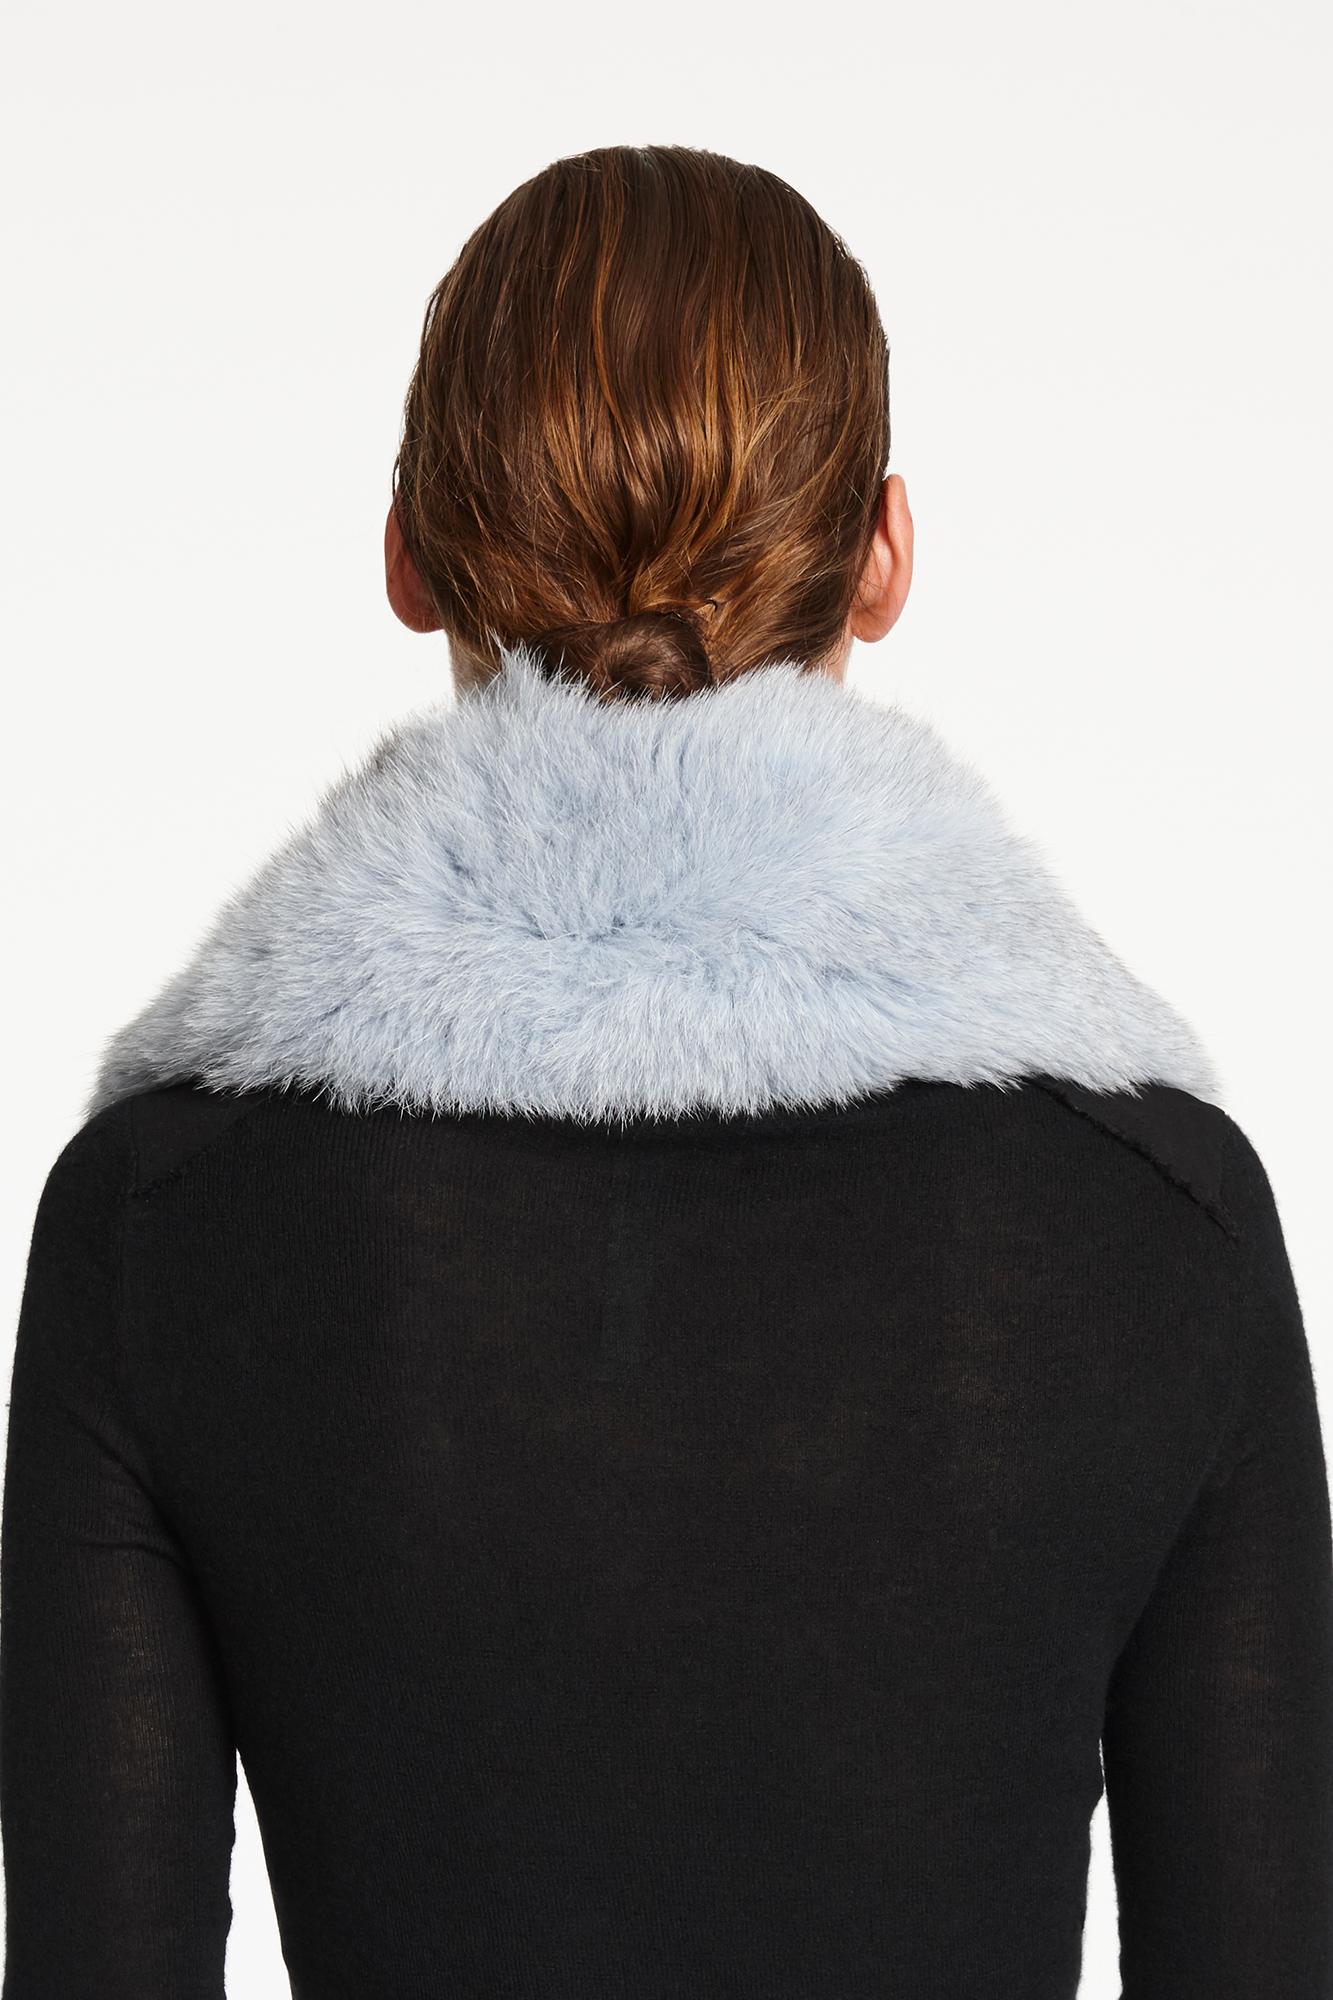 Verheyen London Peter Pan Collar in Iced Blue Fox Fur & lined in silk  1